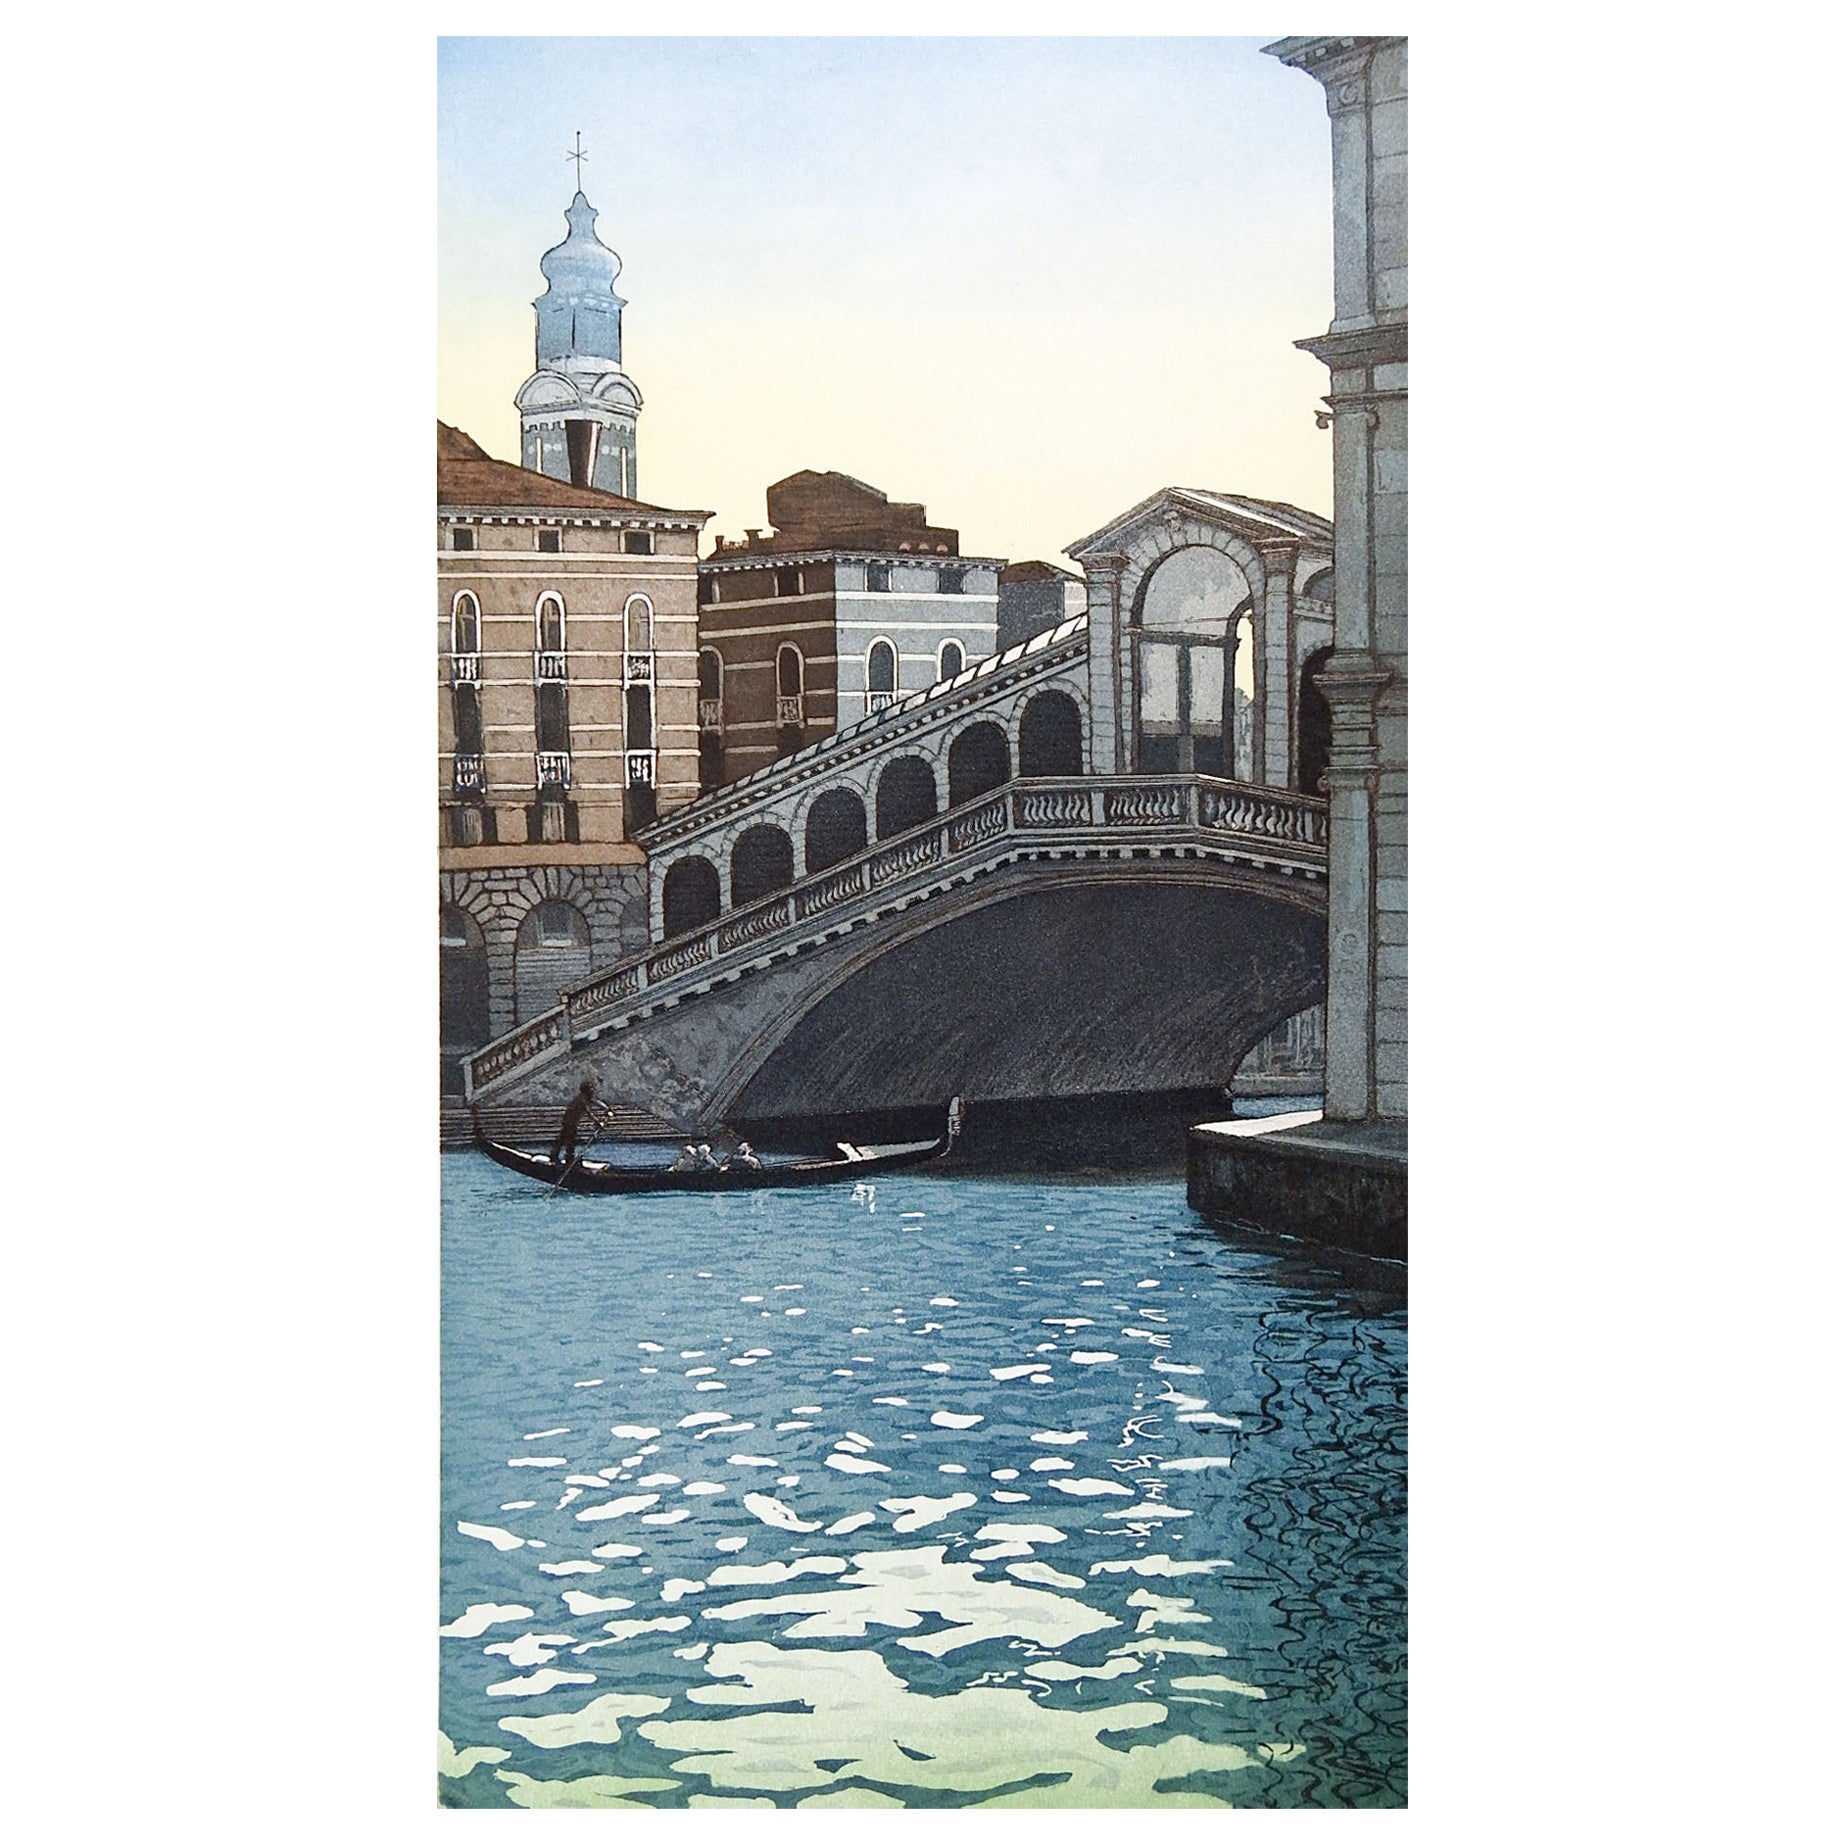  Rialto-Brücke in Venedig, Italien  Ätzen im Angebot